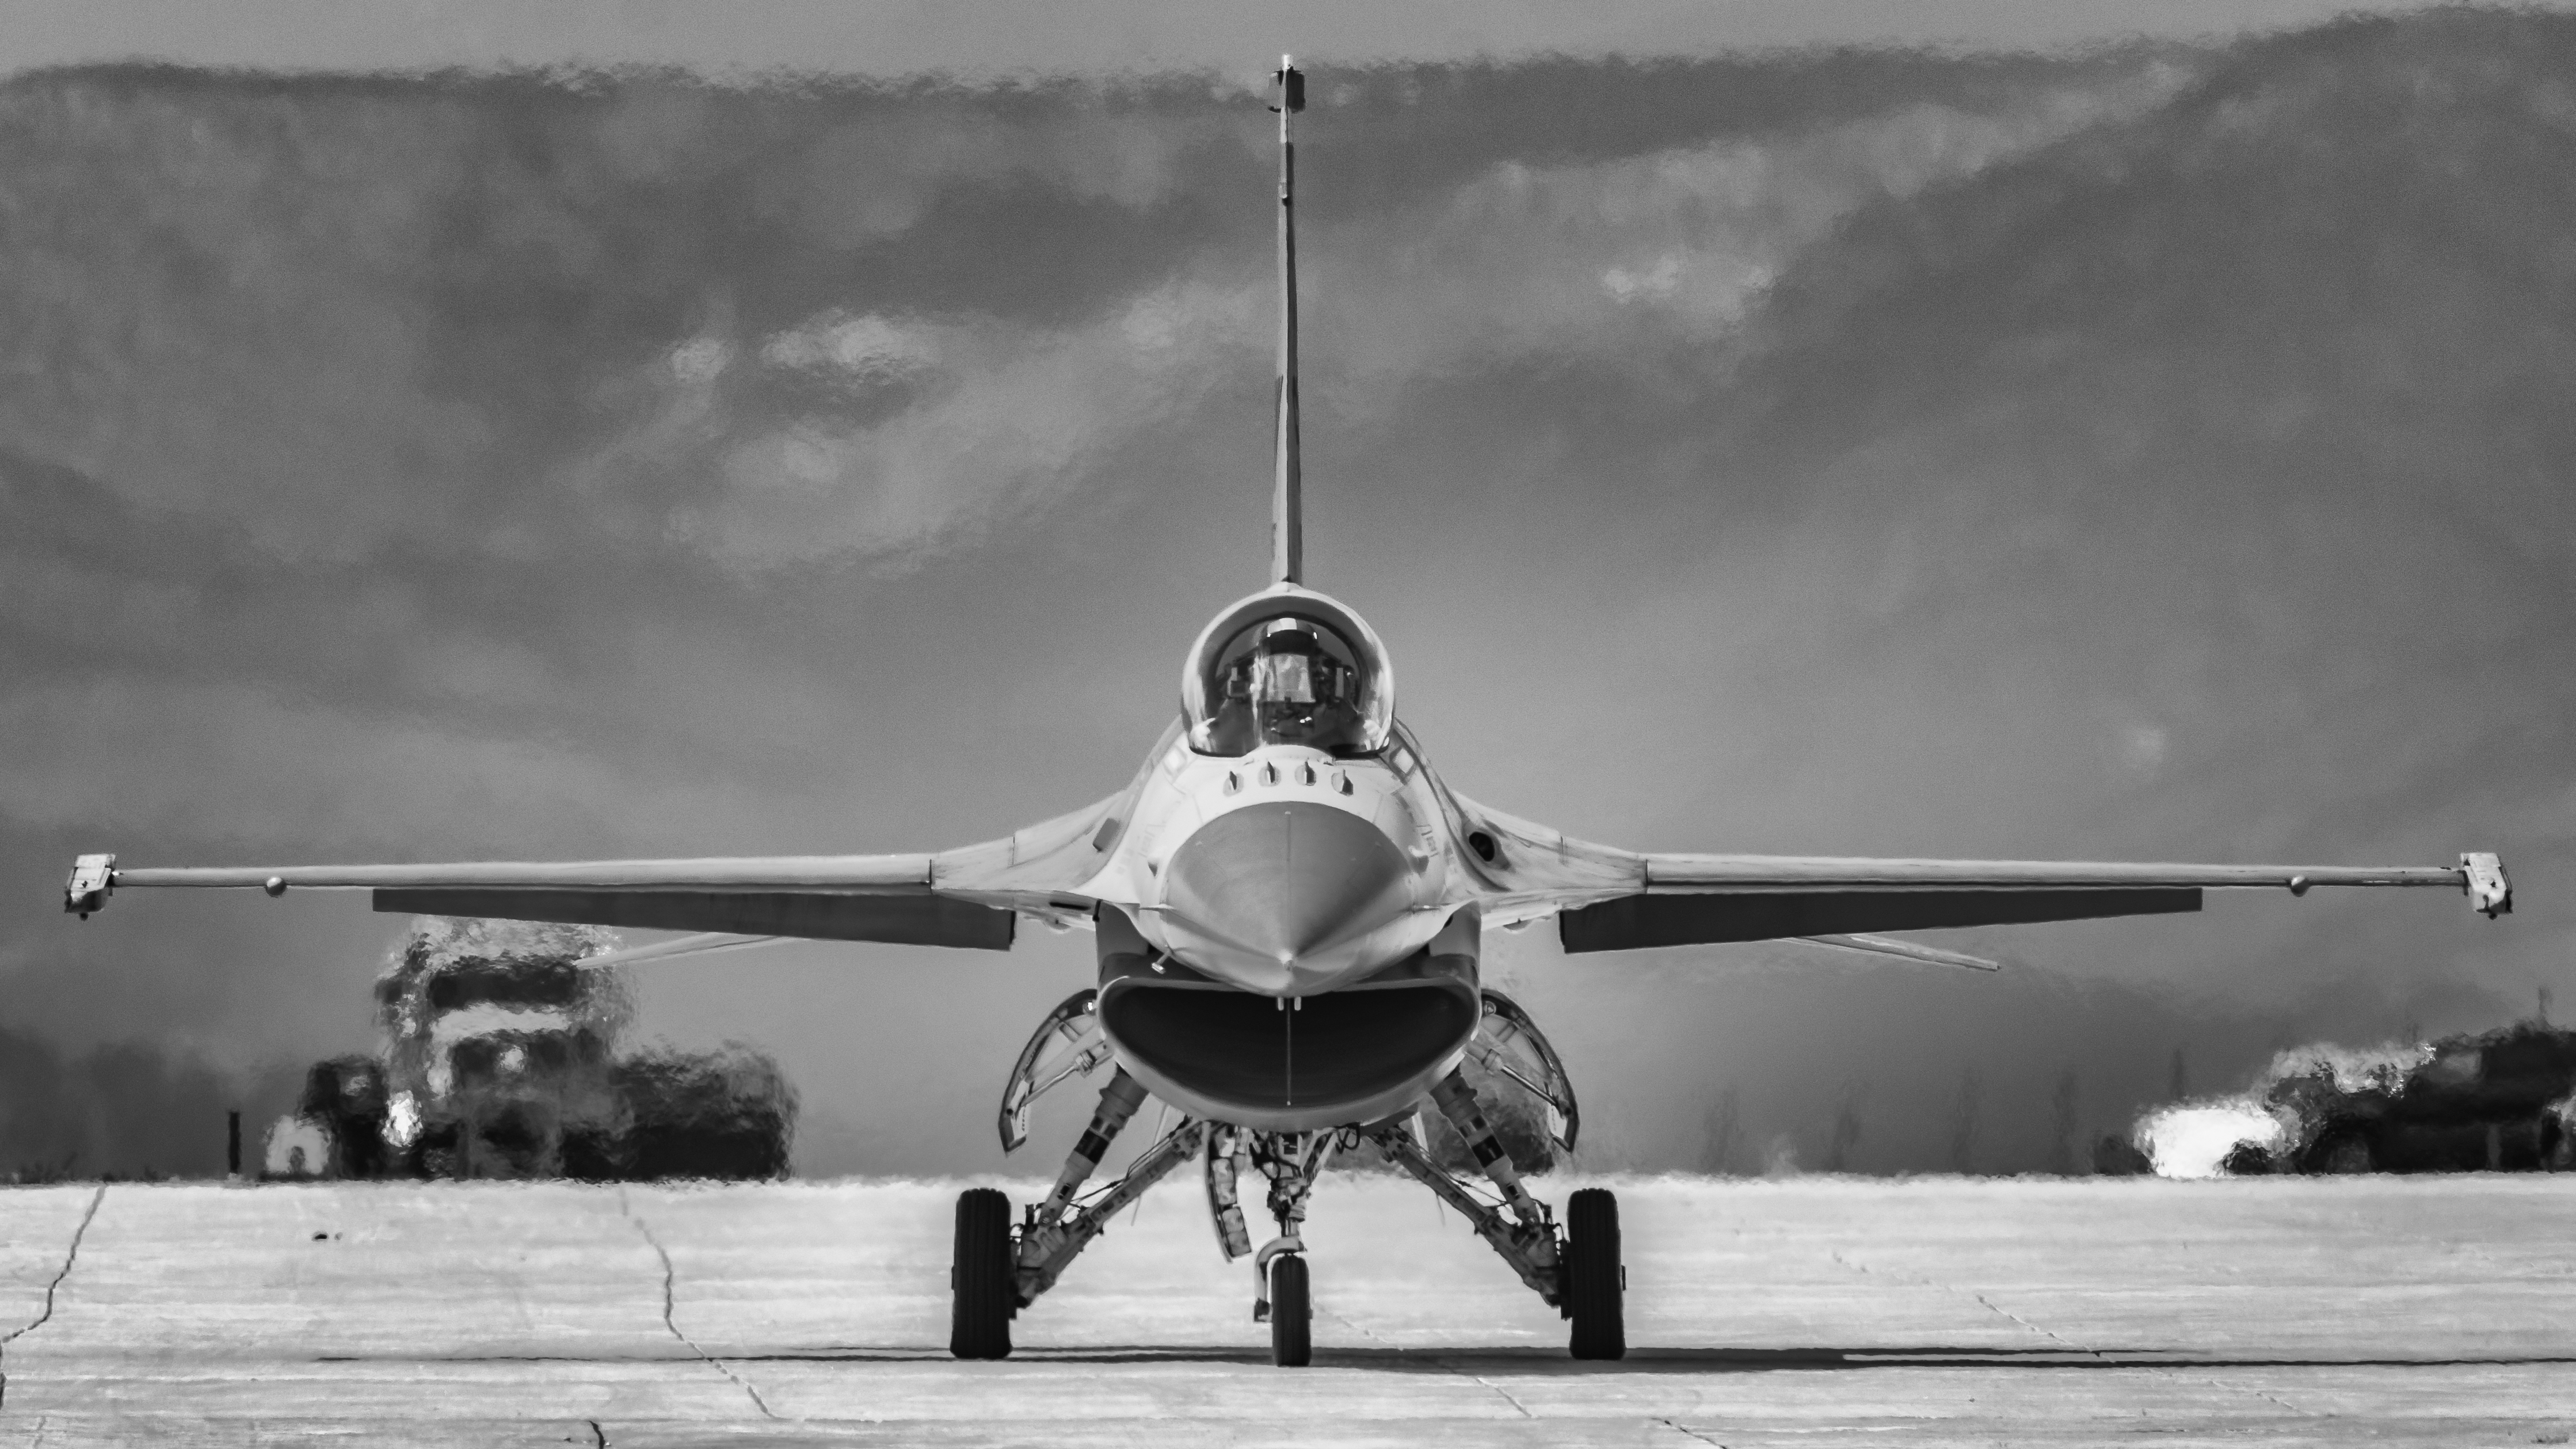 General Dynamics F-16 Fighting Falcon 4k Ultra HD Wallpaper | Background Image | 4476x2518